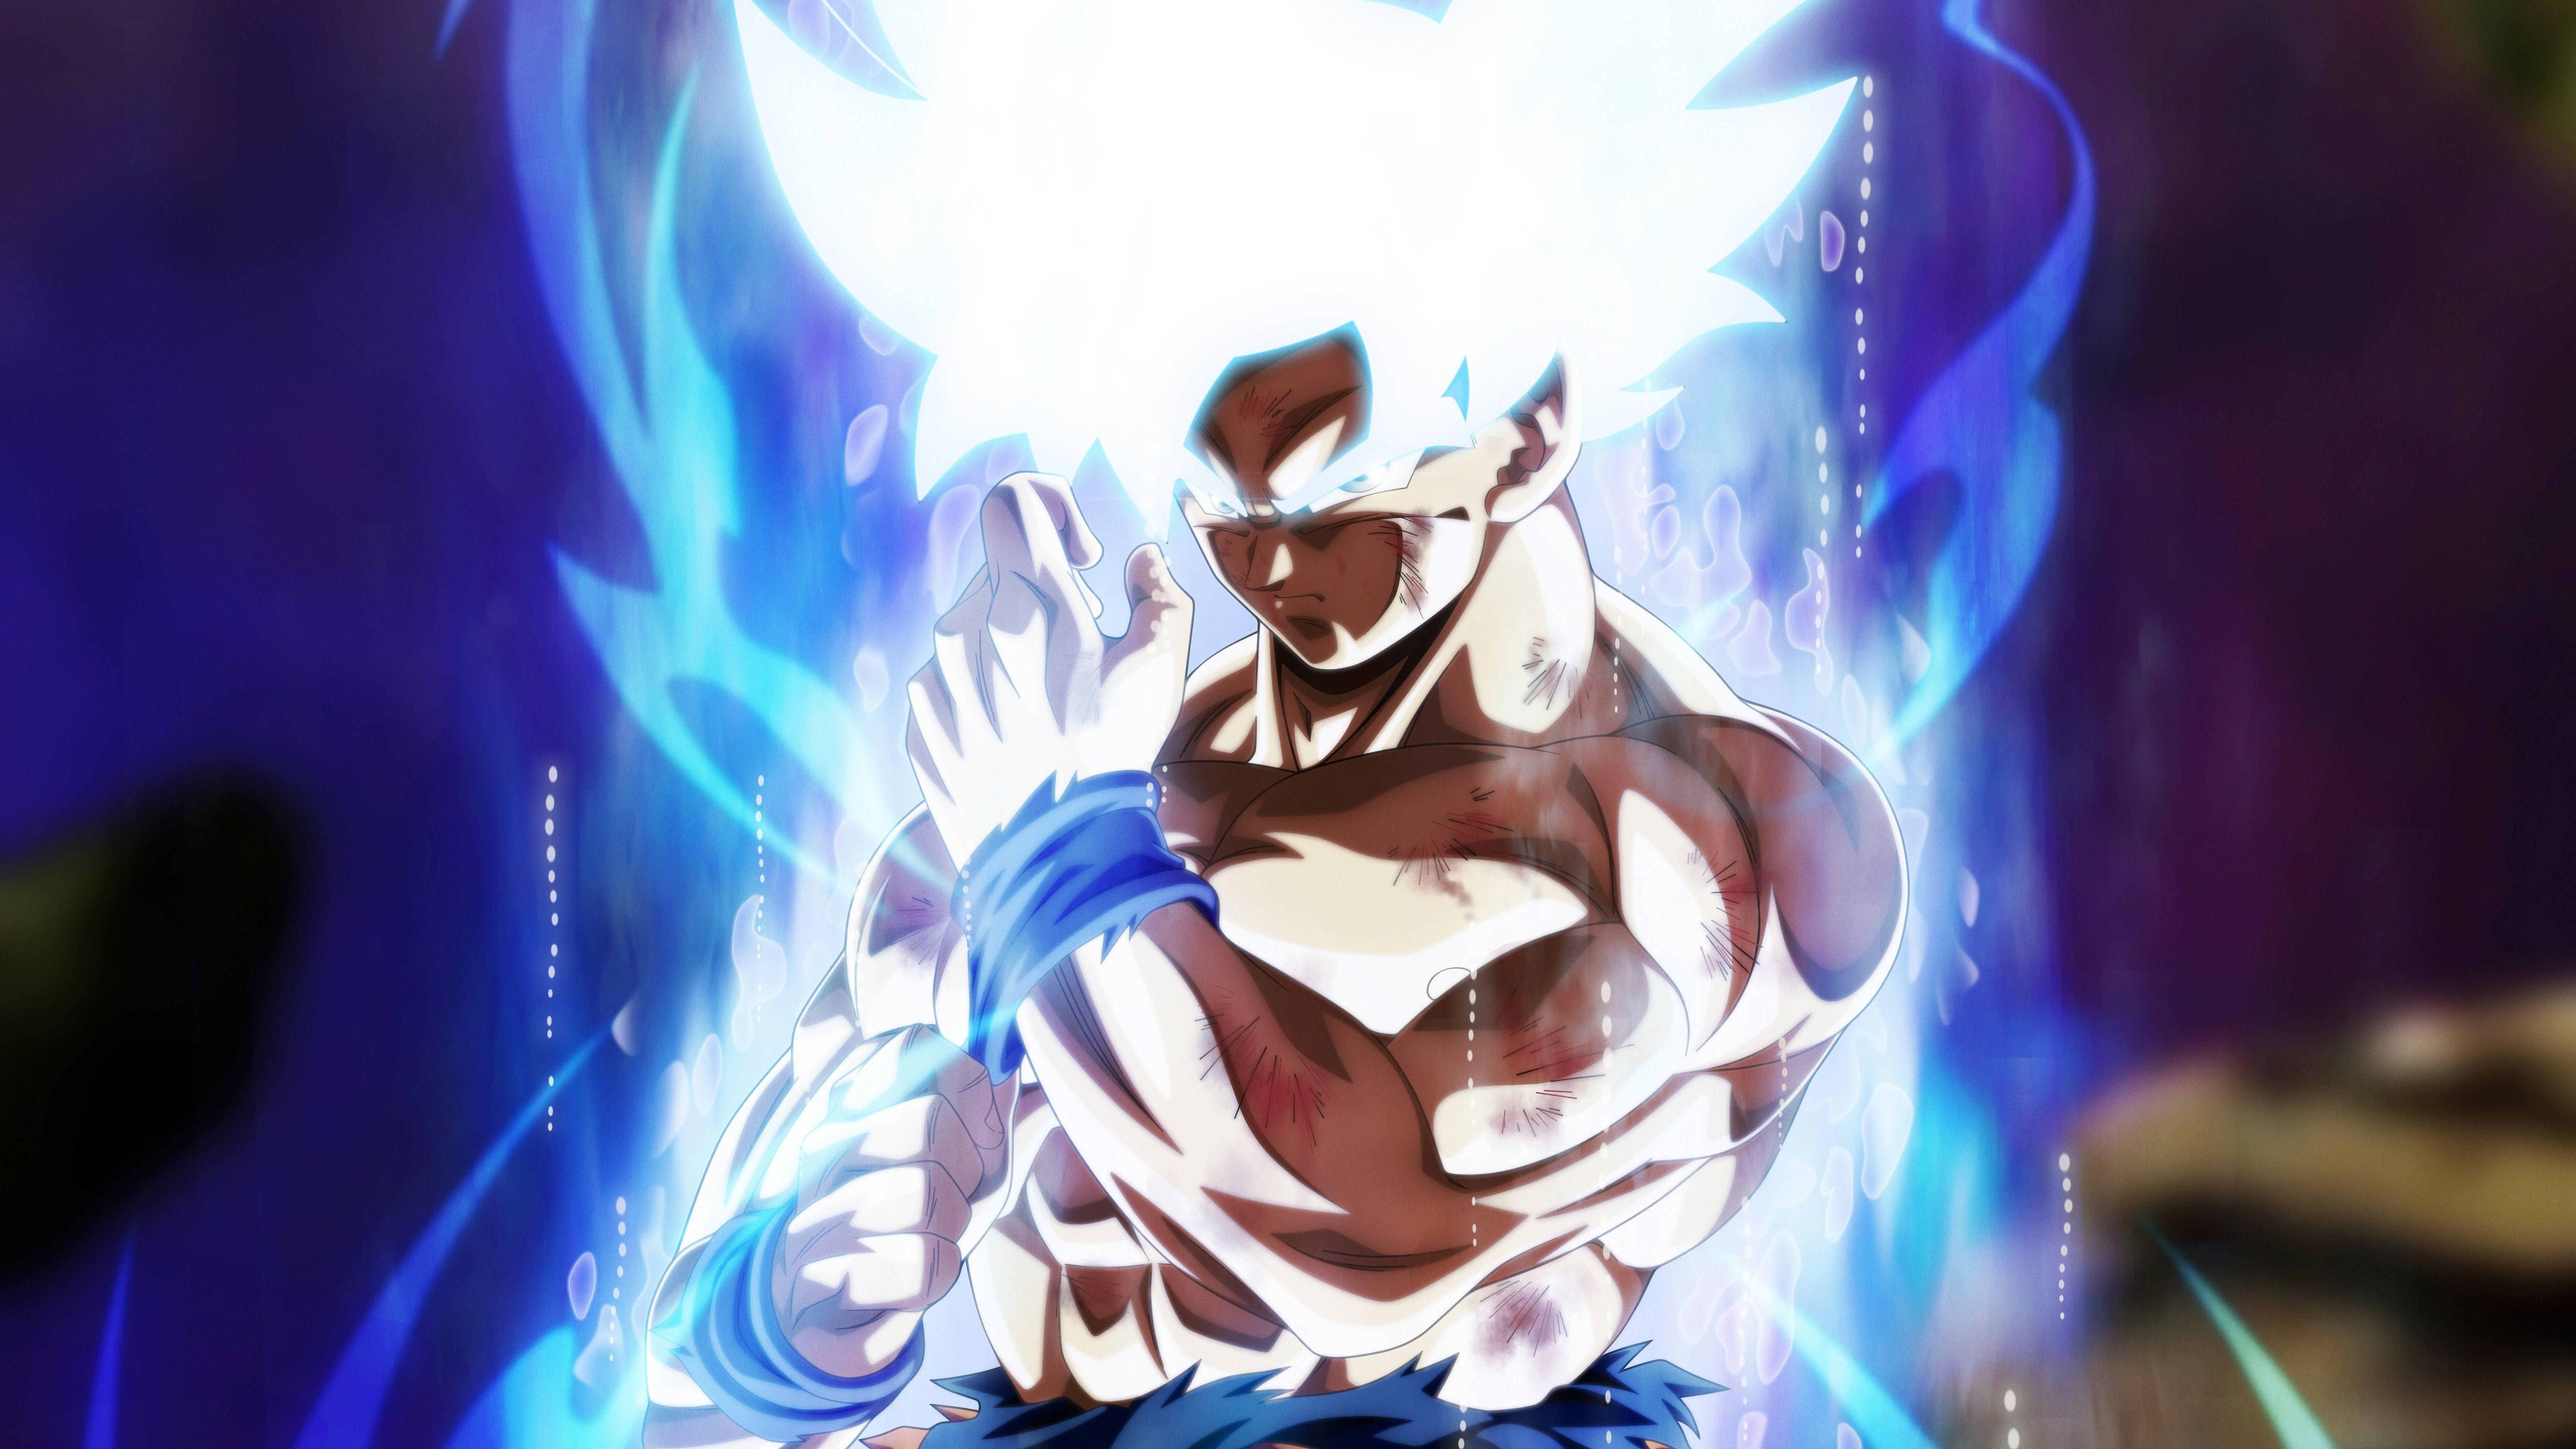 Dbz Wallpapers Goku - Goku Ultra Instinct Full Power, HD Wallpapers